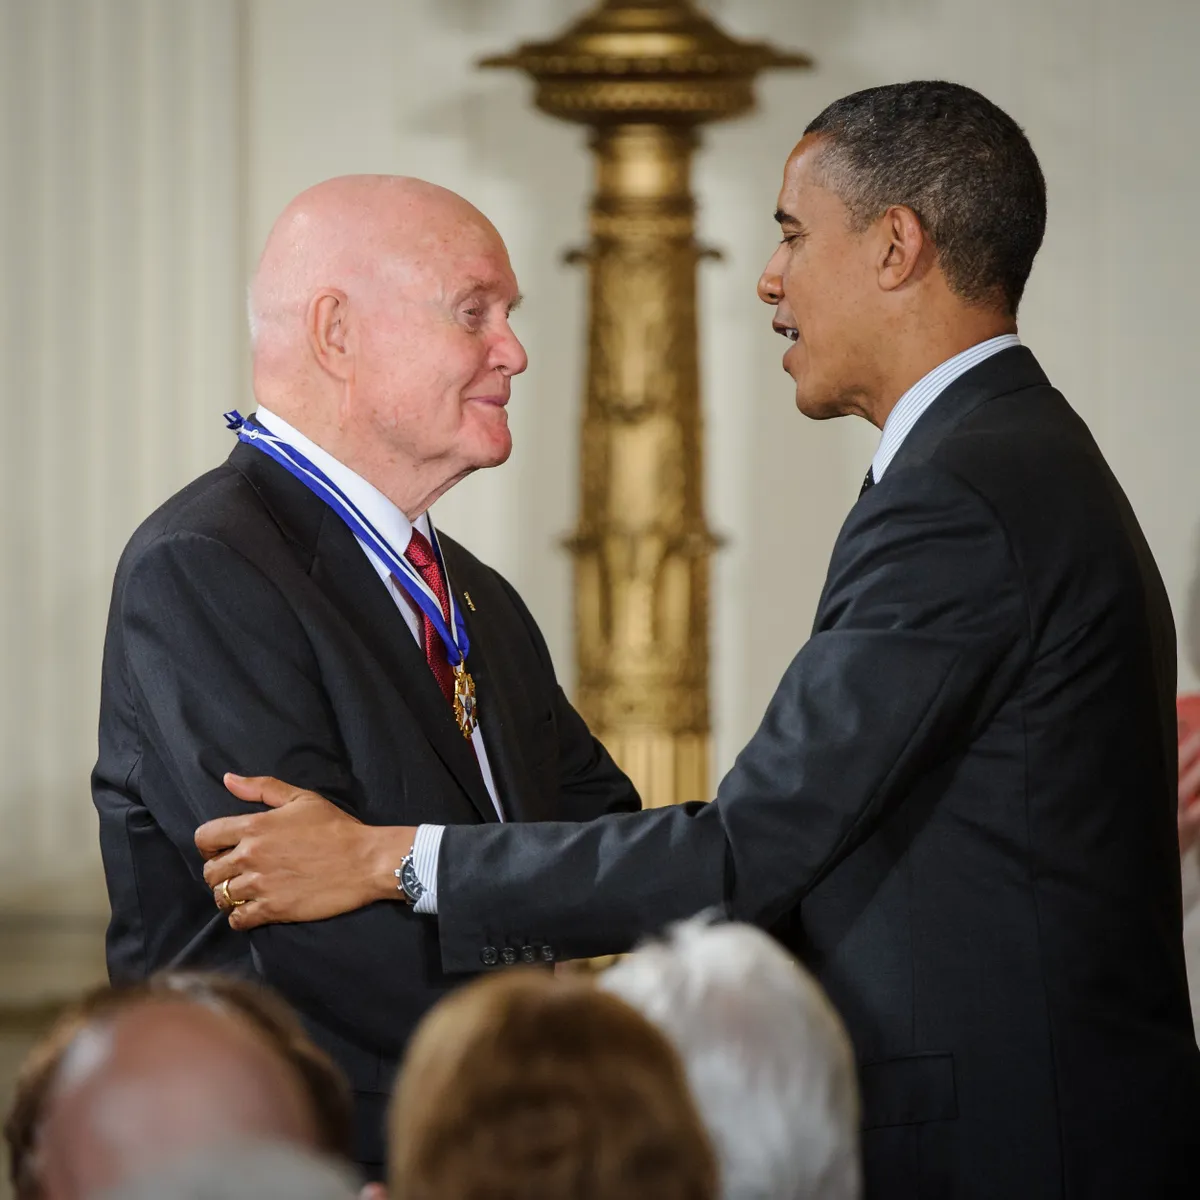 President Barack Obama presents John Glenn with the Presidential Medal of Freedom, 29 May 2012. (Credit: NASA/Bill Ingalls)